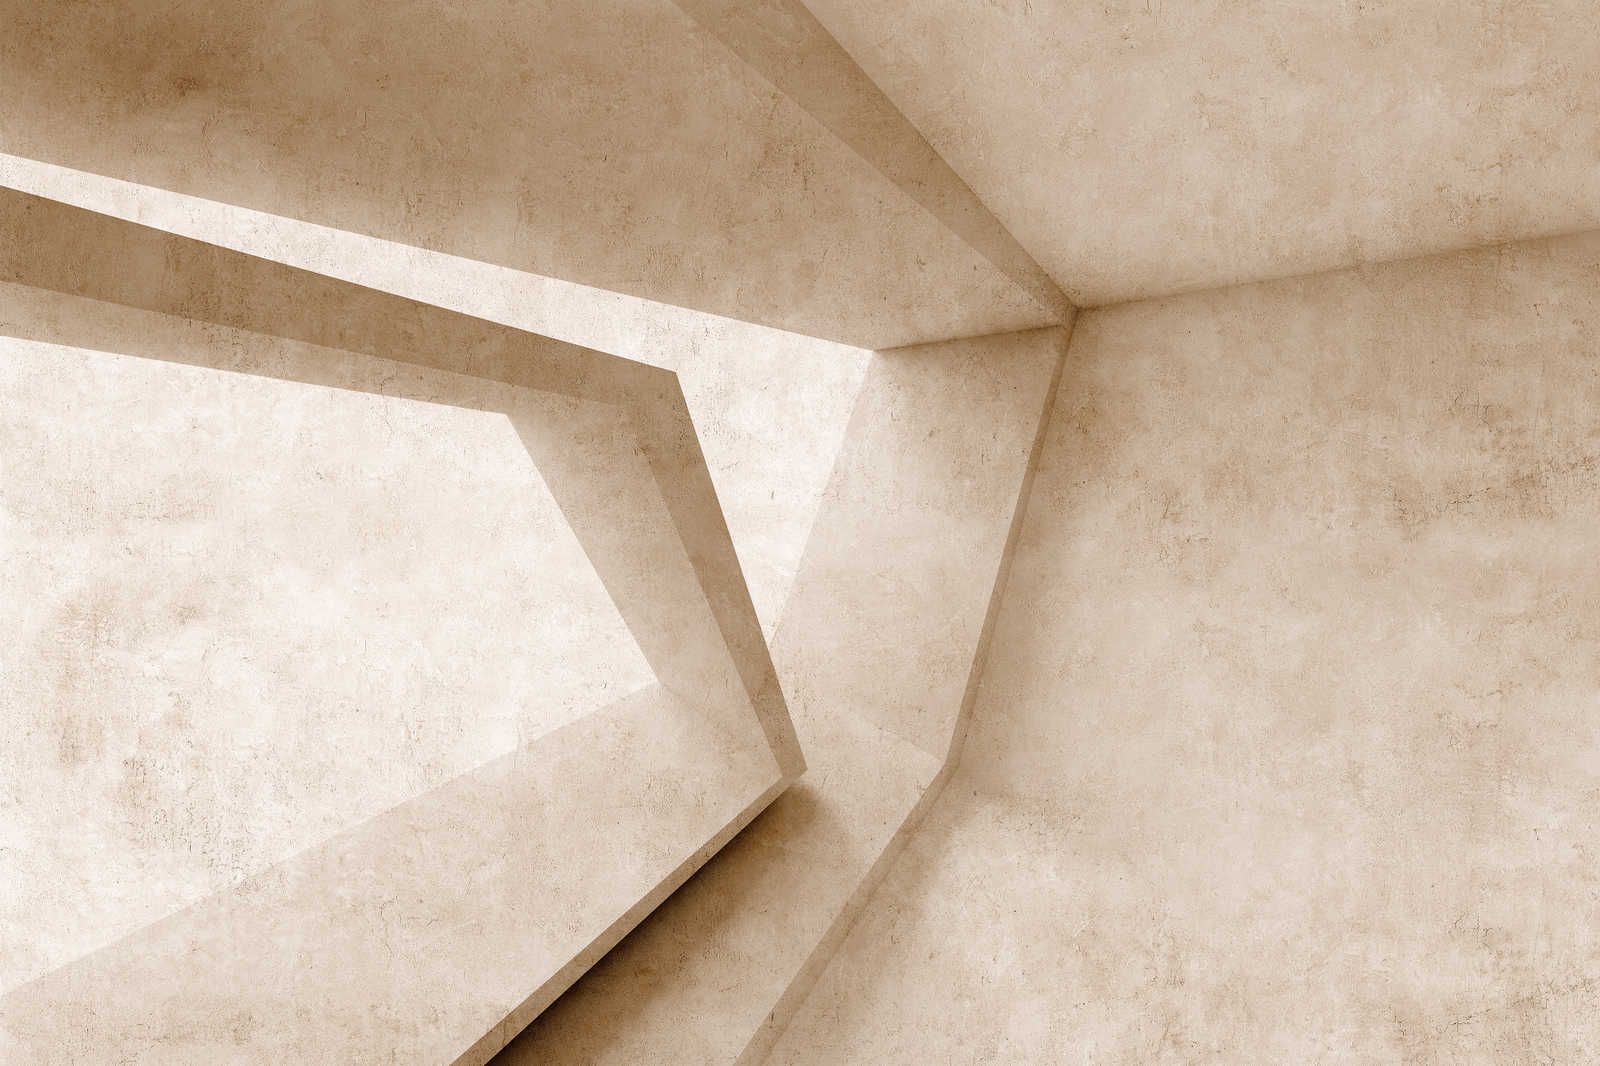             Futura 1 - Beton Leinwandbild 3D Muster – 0,90 m x 0,60 m
        